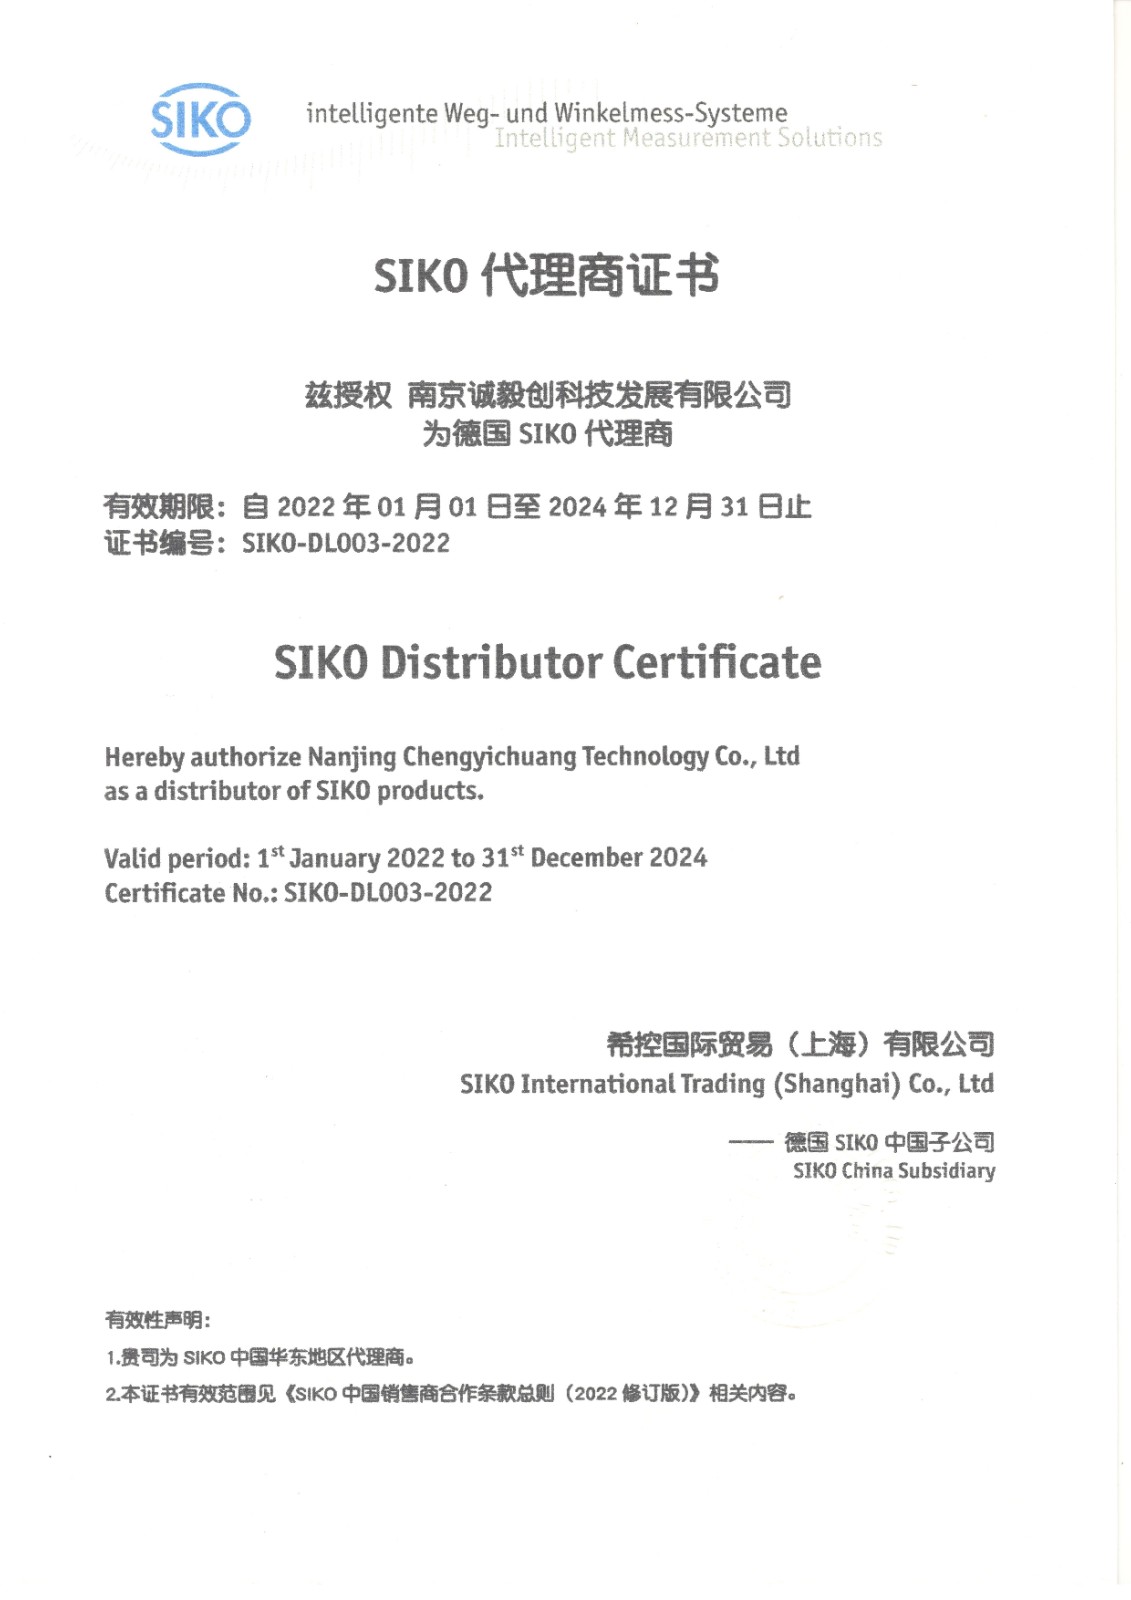 SIKO 2022-2024年代理证.jpg